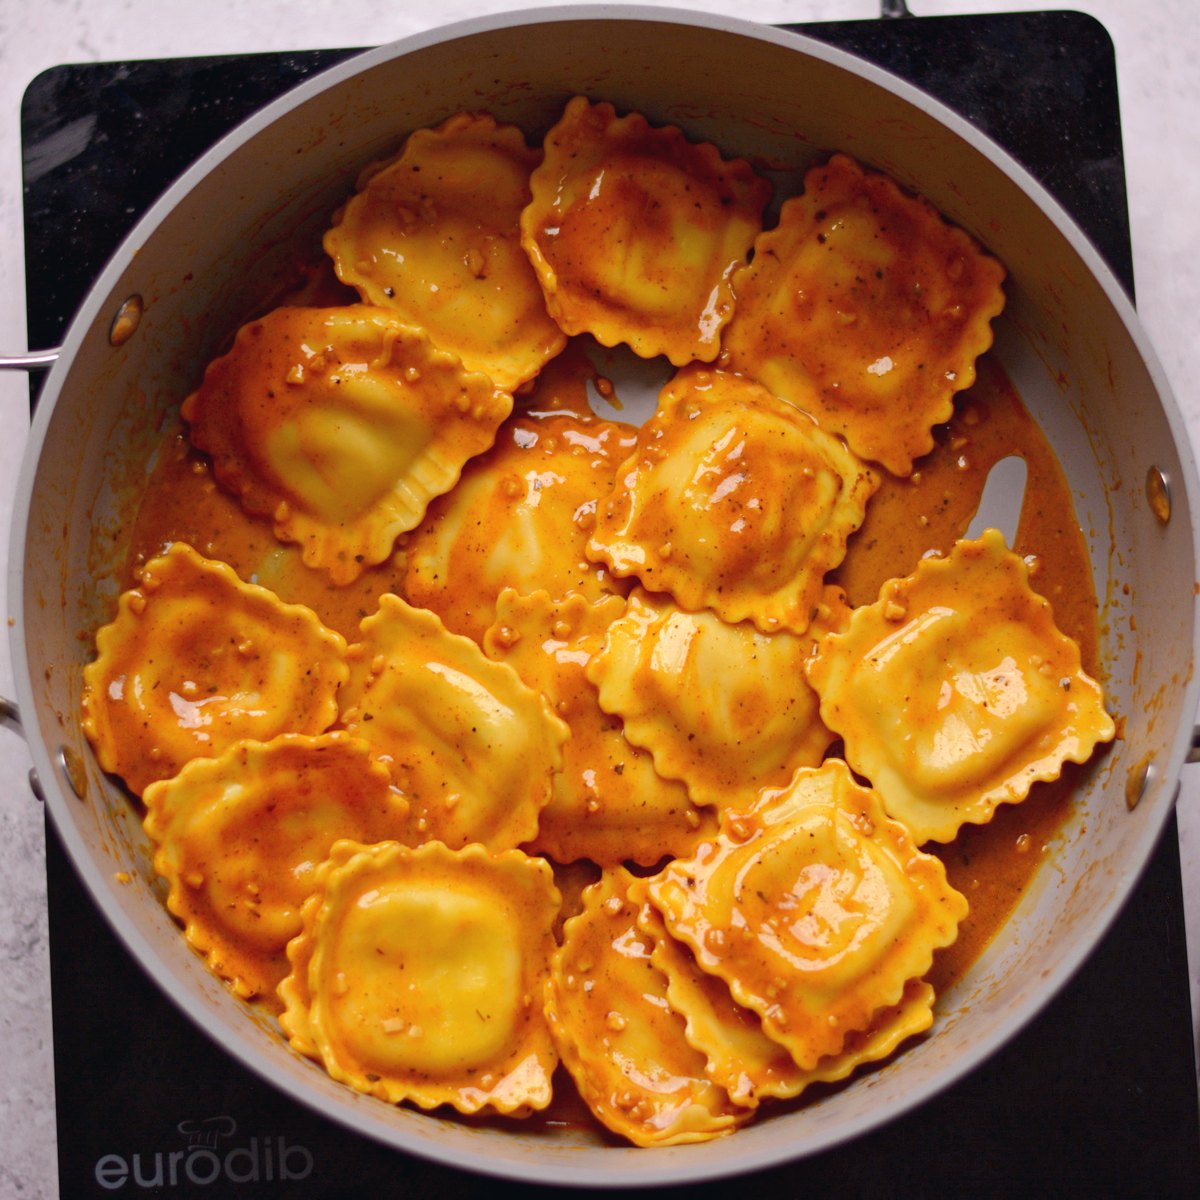 Ravioli covered in brown sauce inside a pan.